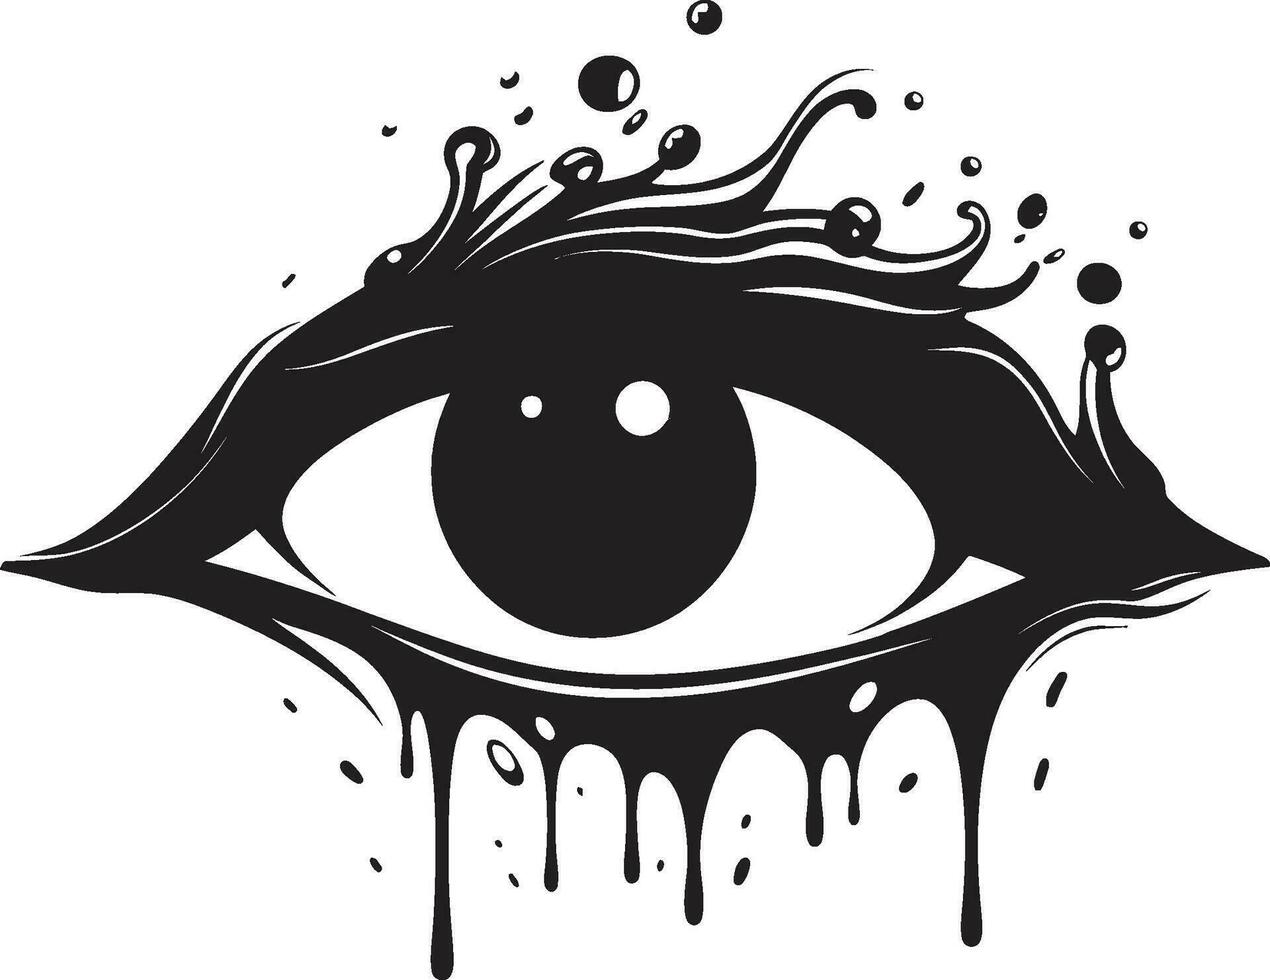 Sightaura dynamisch Auge Symbol Gazemaster Präzision Vektor Auge Emblem